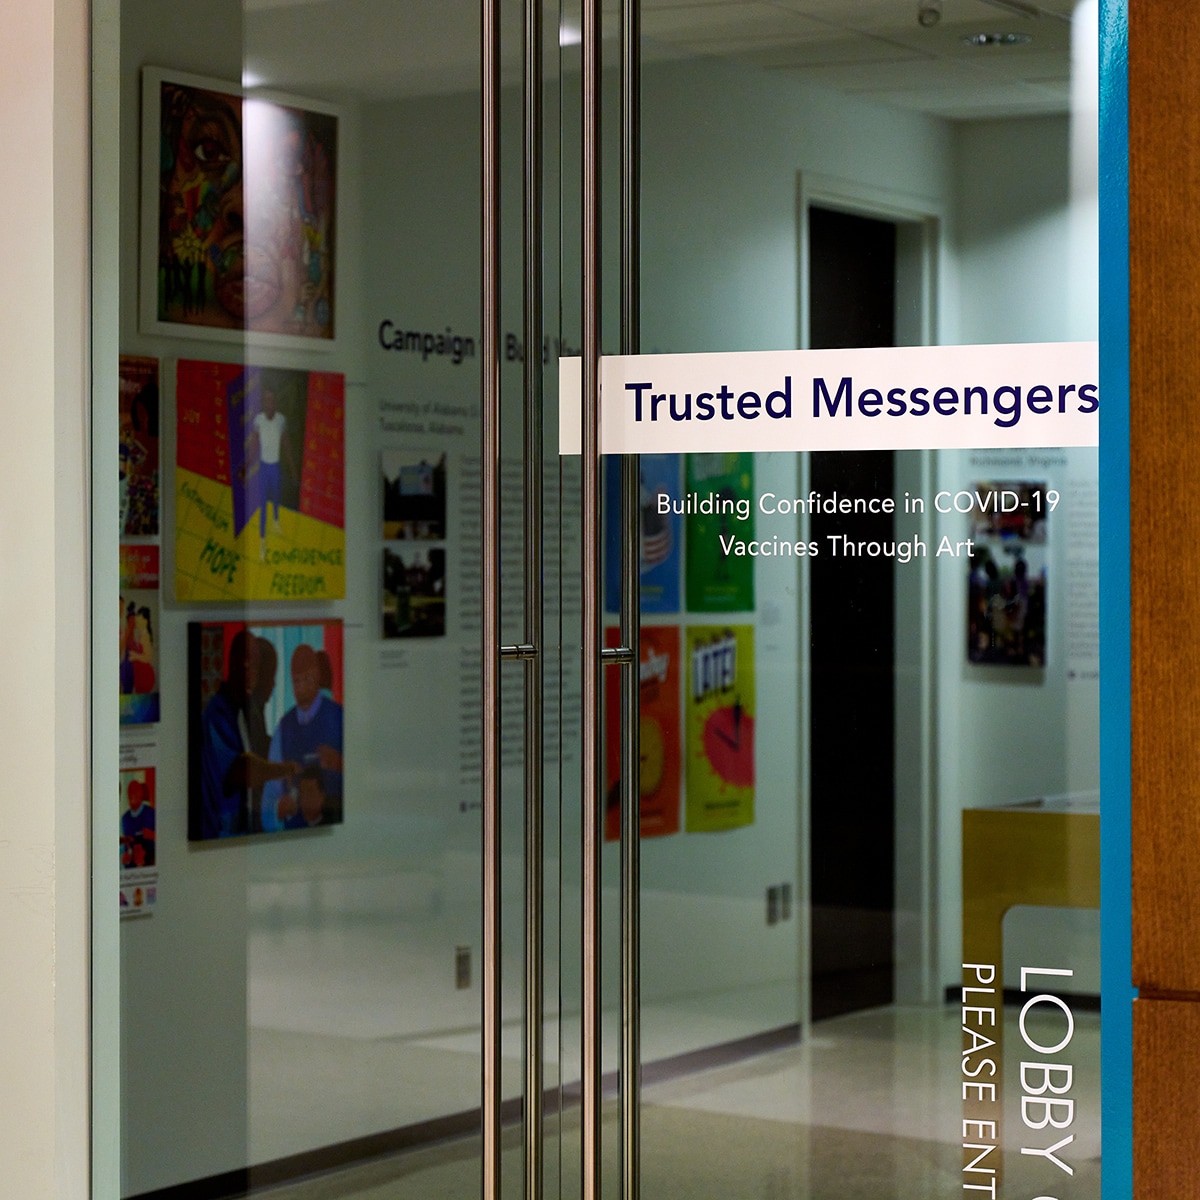 Trusted Messengers exhibit